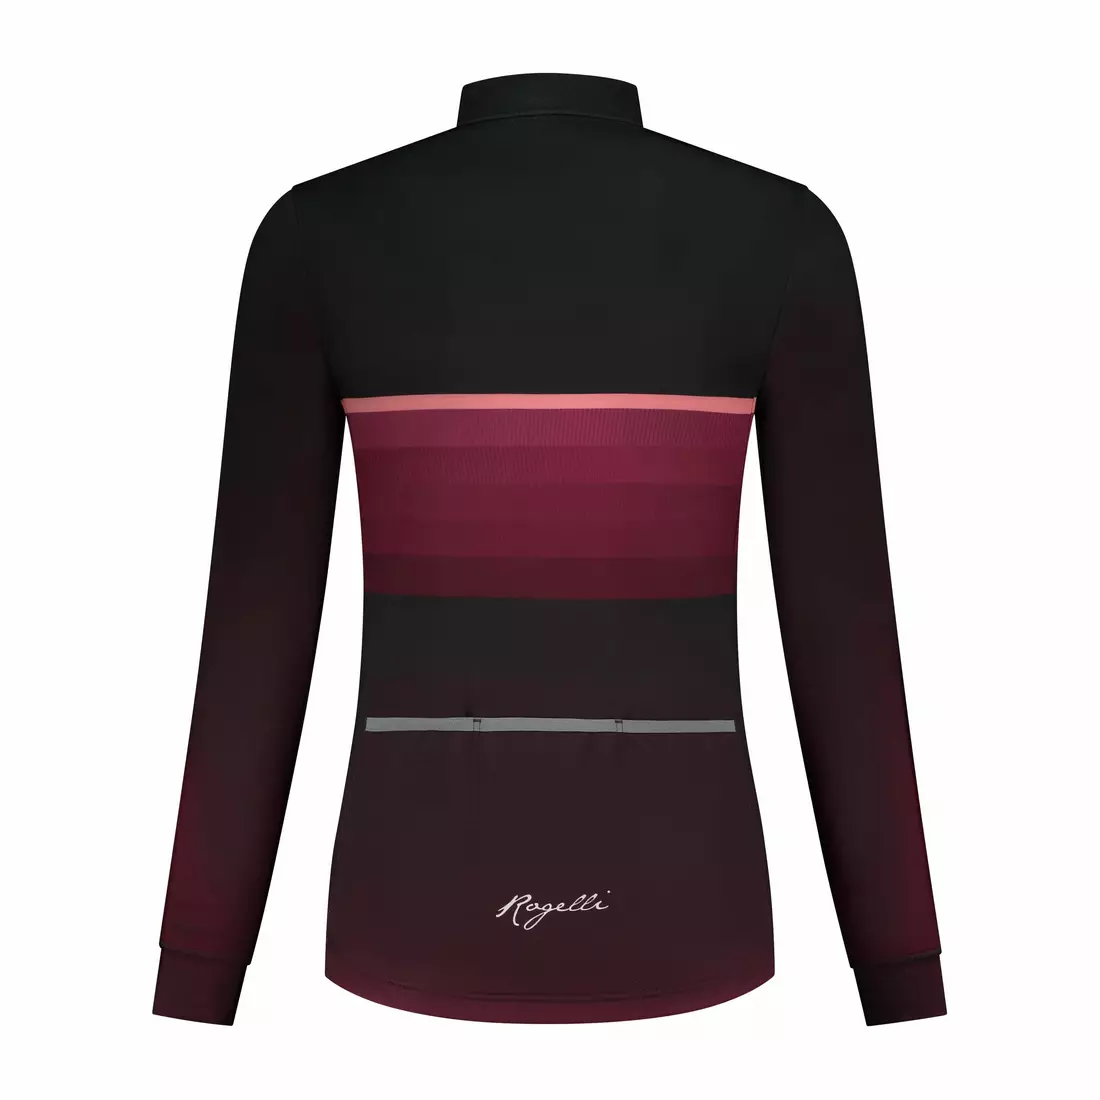 Rogelli Damen-Radsport-Sweatshirt IMPRESS II, Burgunderrot